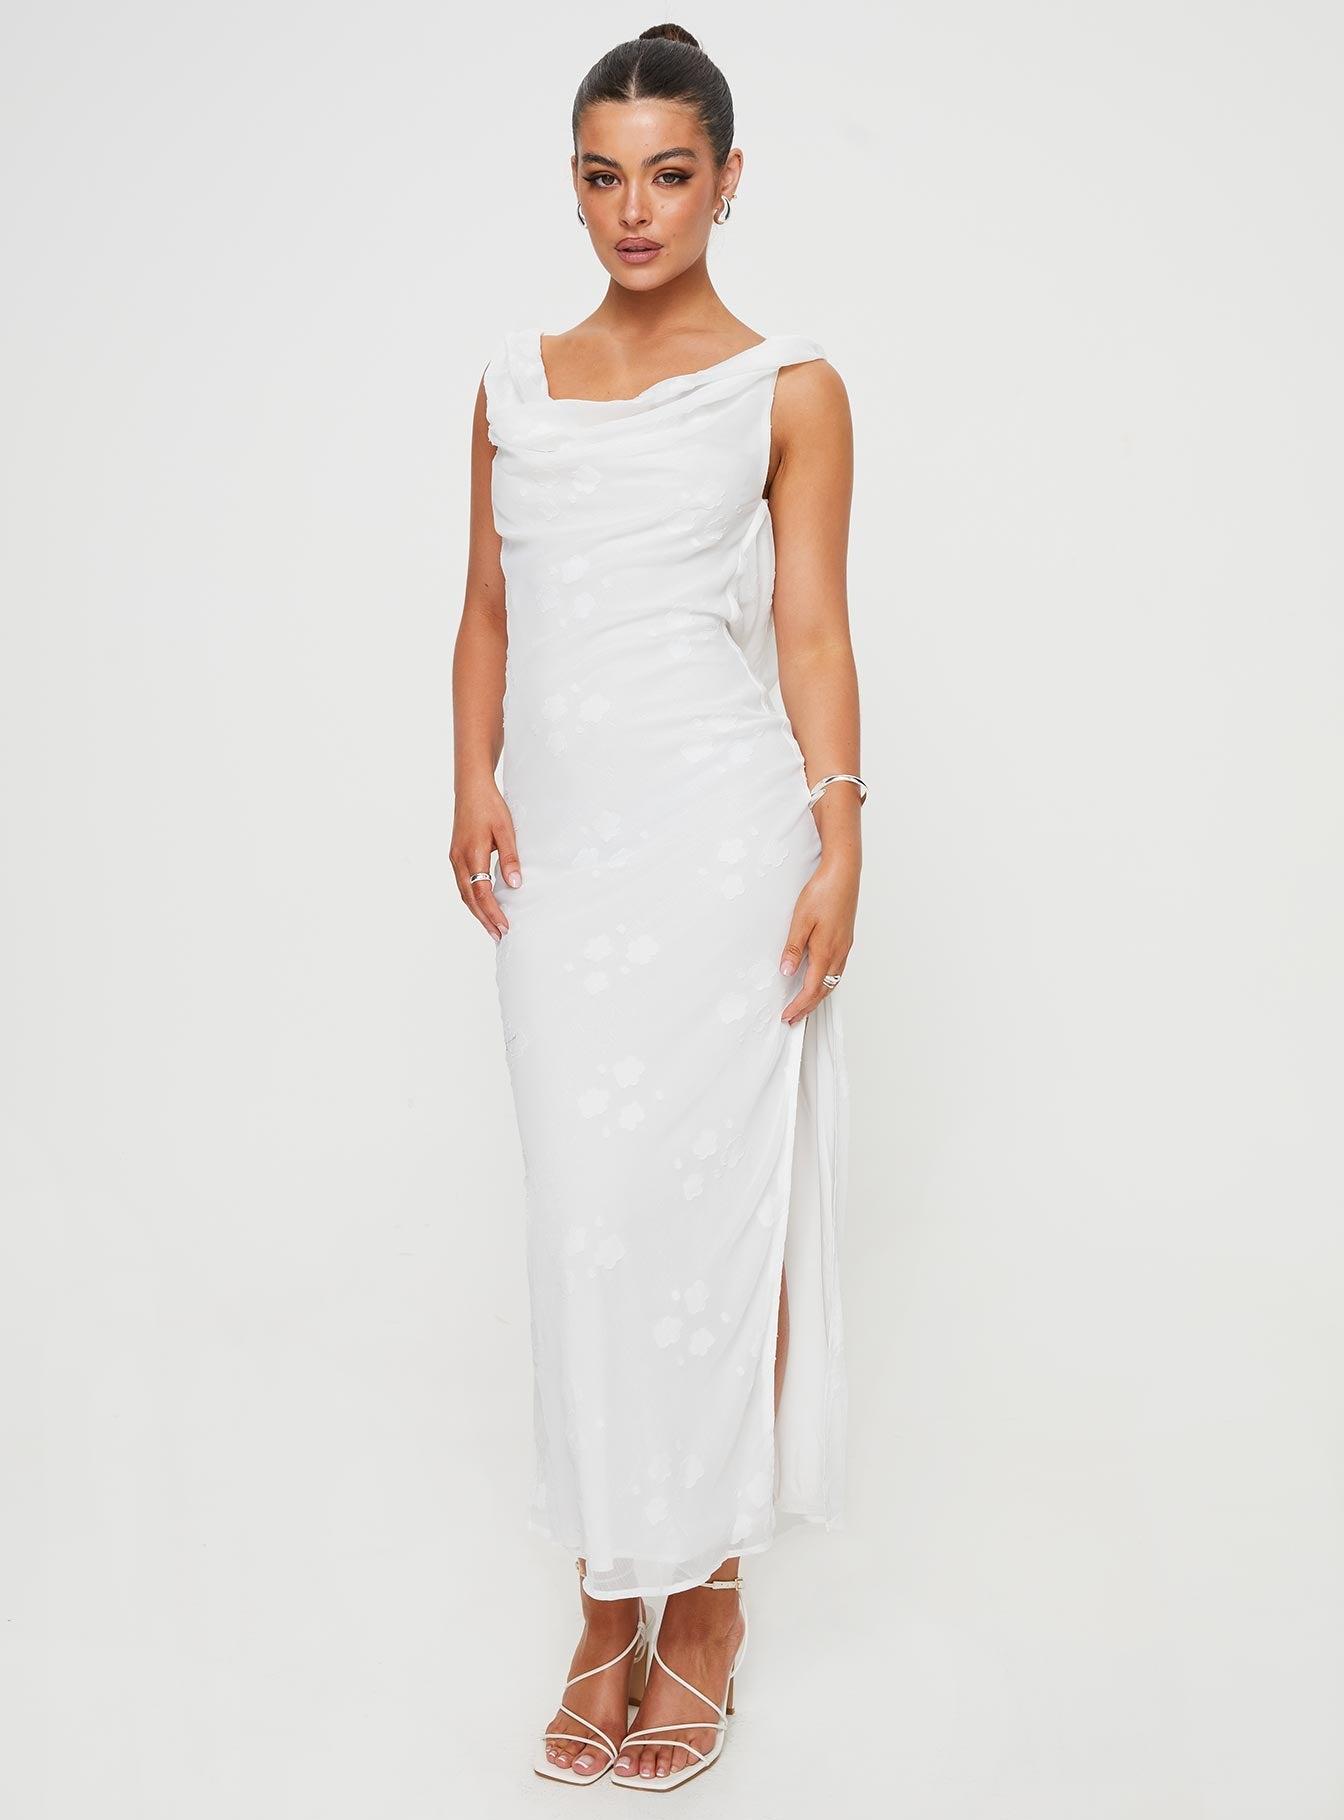 Shop Formal Dress - Contessa Maxi Dress White sixth image